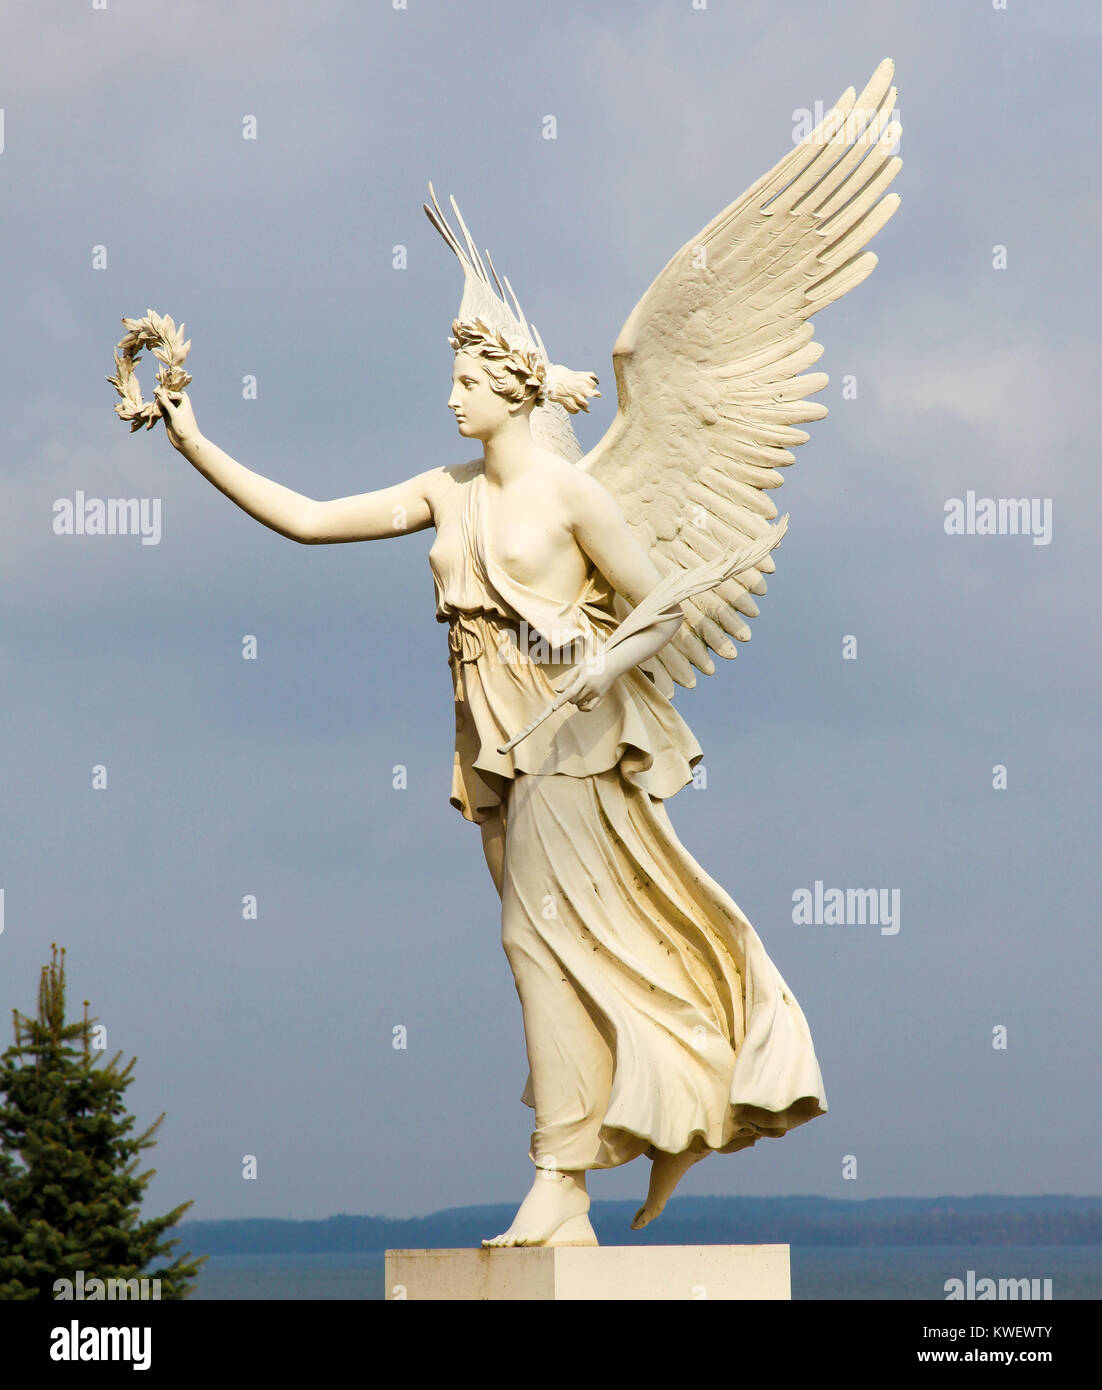 Statue of an angel holding a laurel crown at Schwerin Castle in Schwerin, Mecklenburg-Vorpommern, Germany. Stock Photo